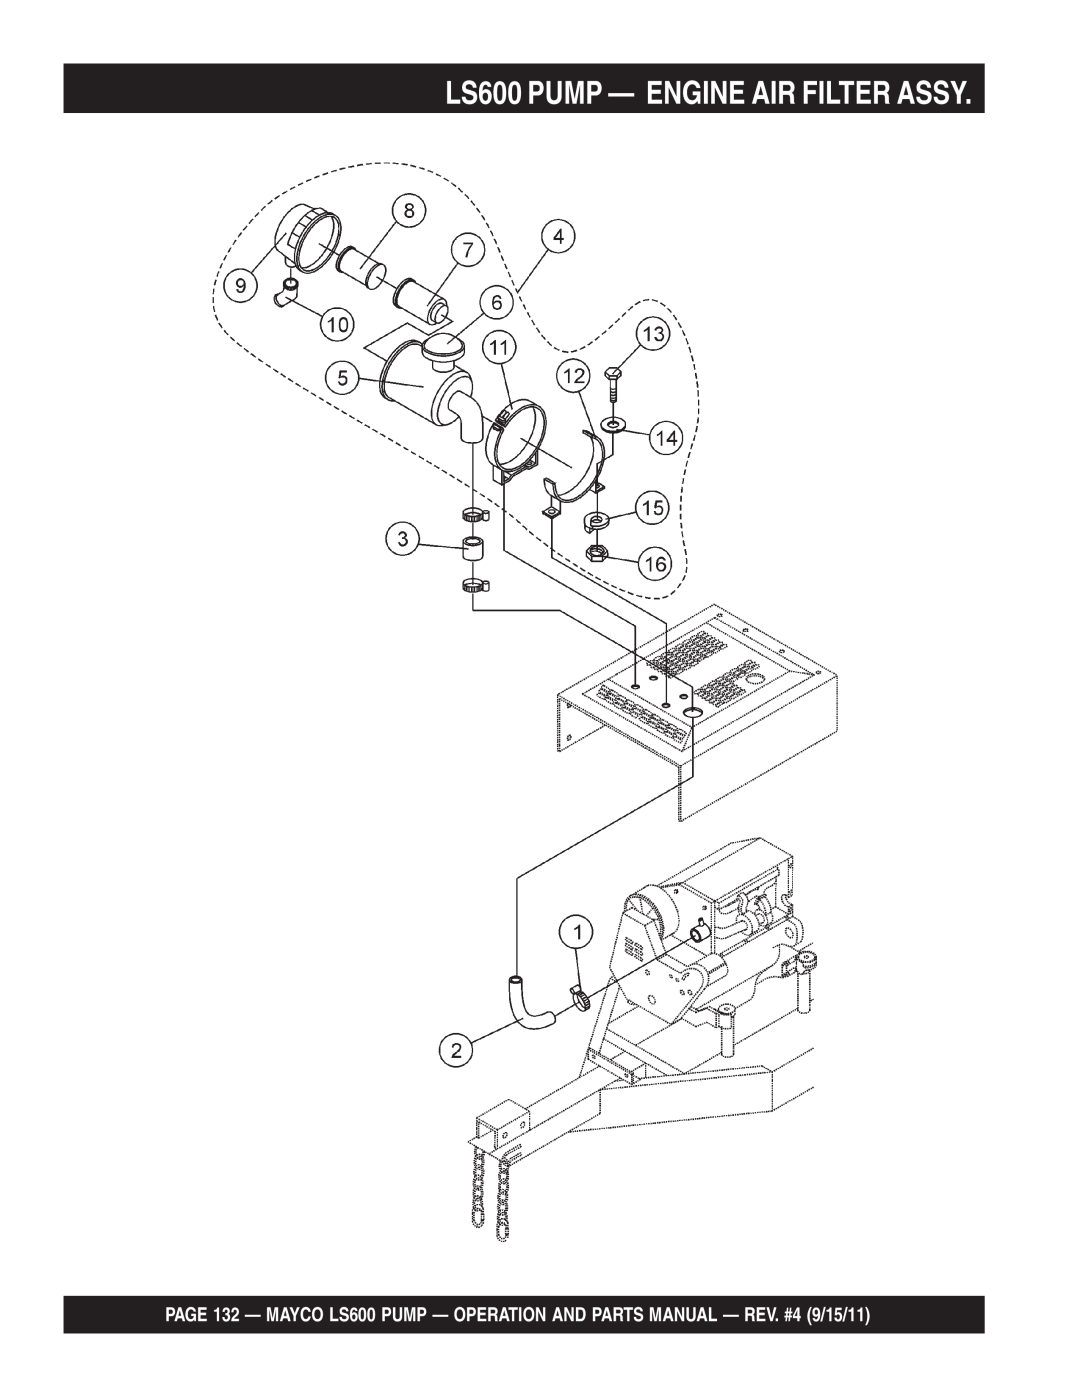 Multiquip manual LS600 PUMP — ENGINE AIR FILTER ASSY 